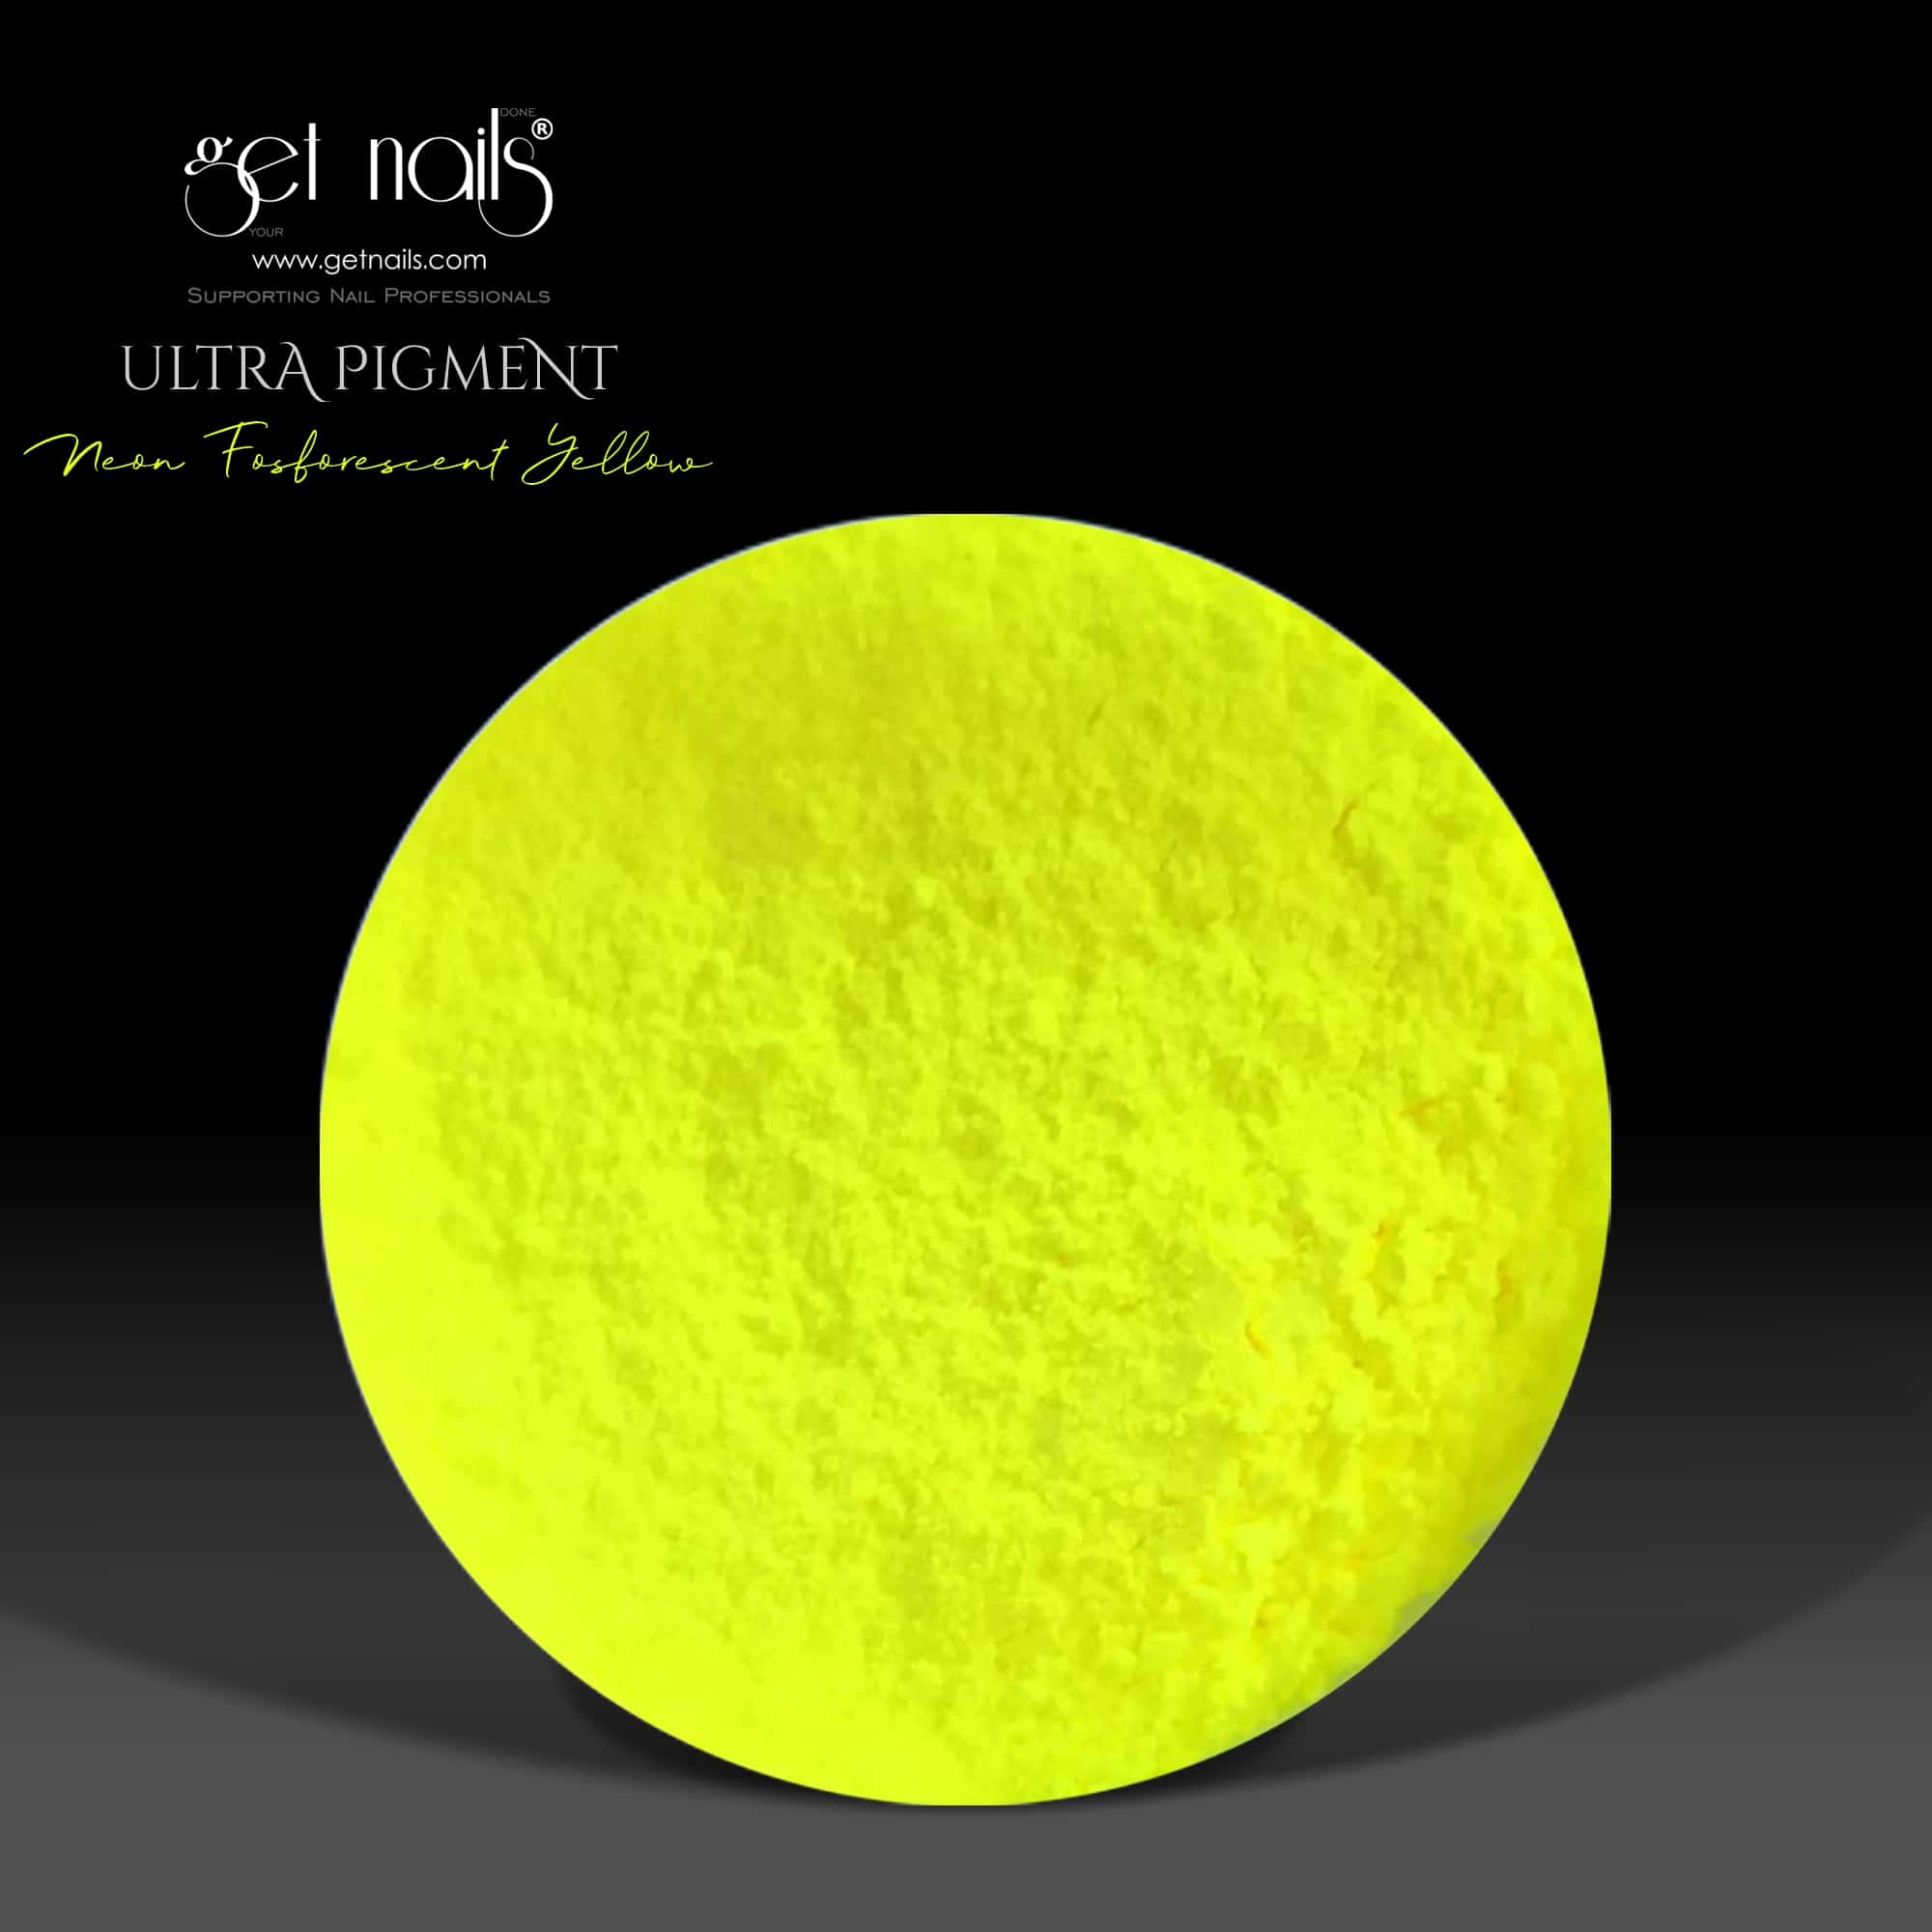 Get Nails Austria - Ultra Pigment Neon Fosforescent Yellow 5g